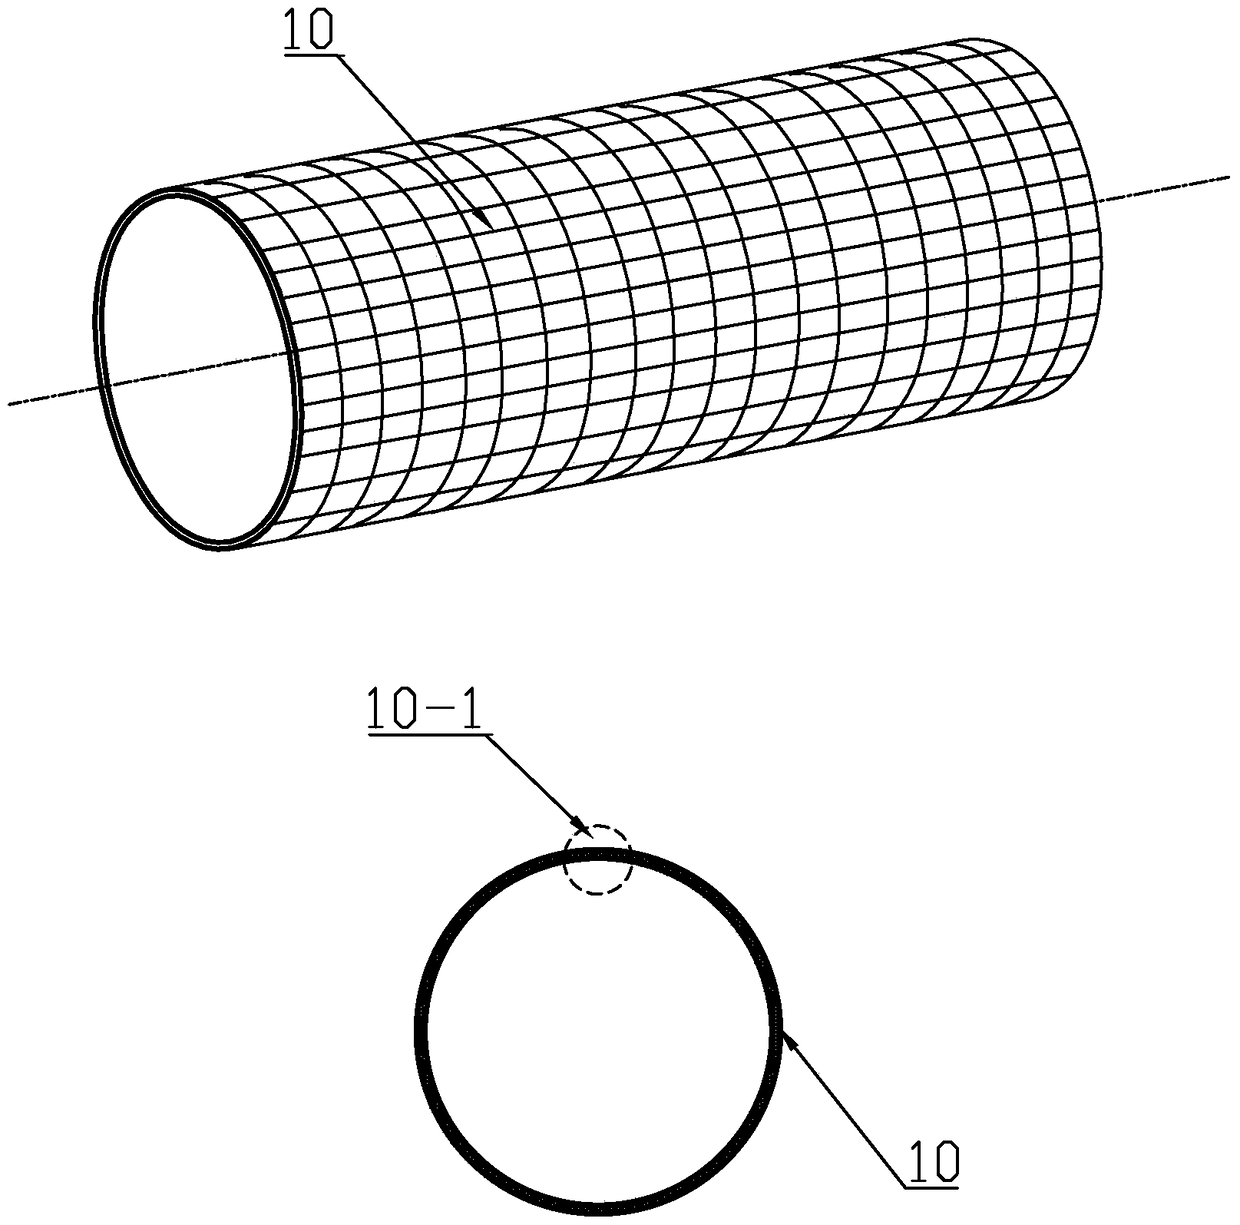 An external pressure hexagonal tubular membrane